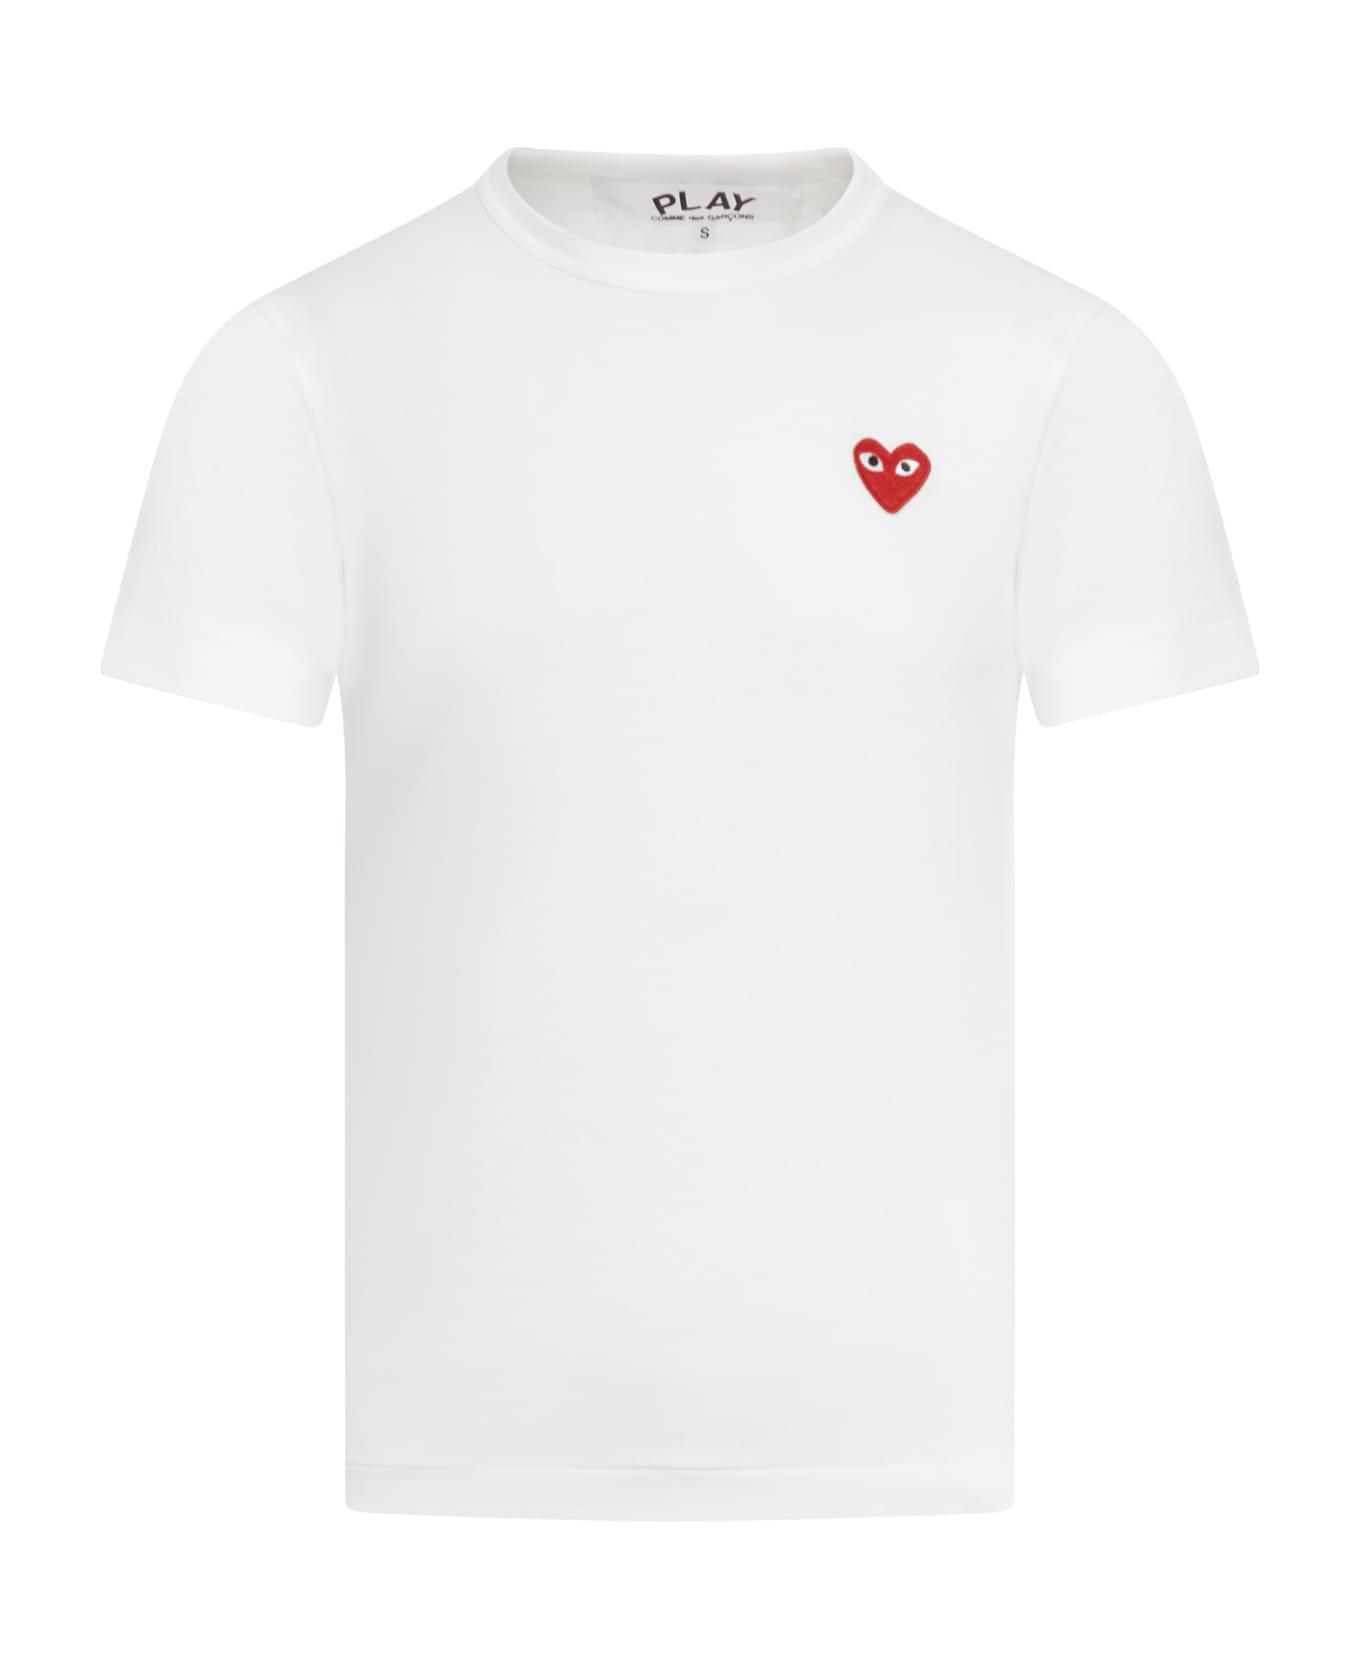 Comme des Garçons Play T-shirt Red Heart - White シャツ